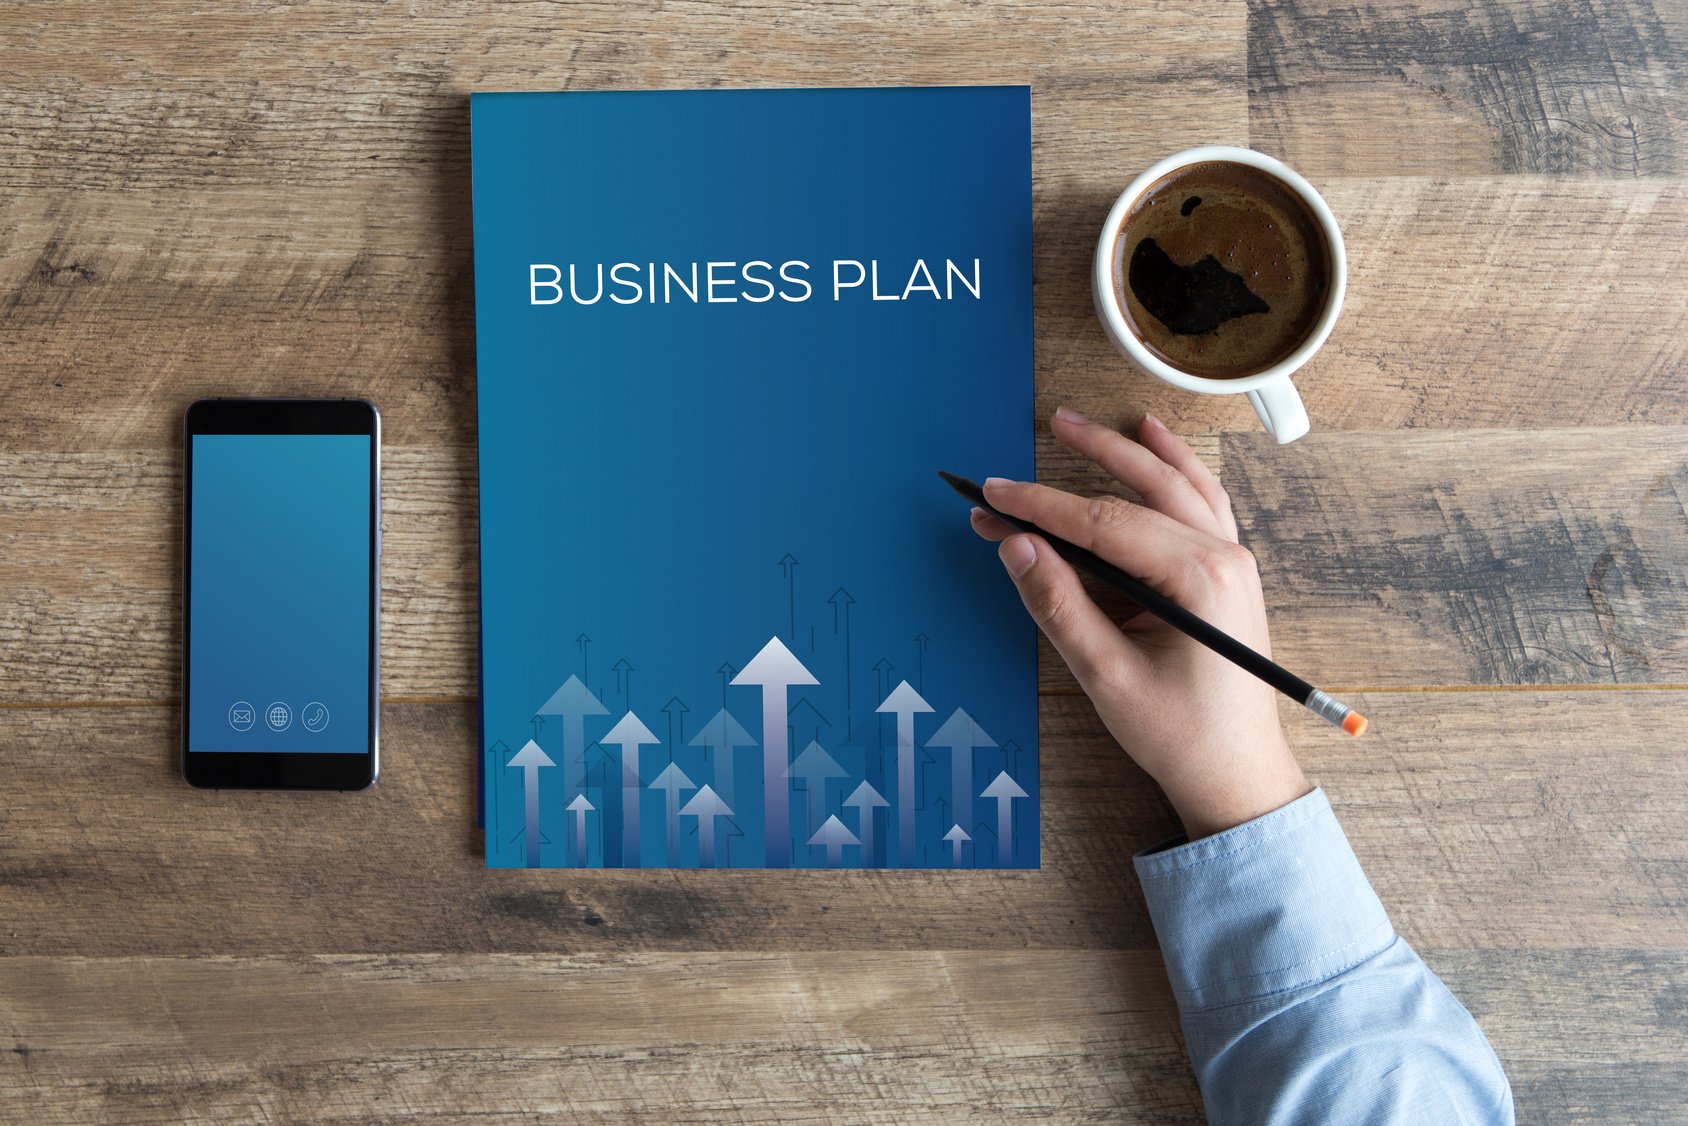 Should You Write a Business Plan?